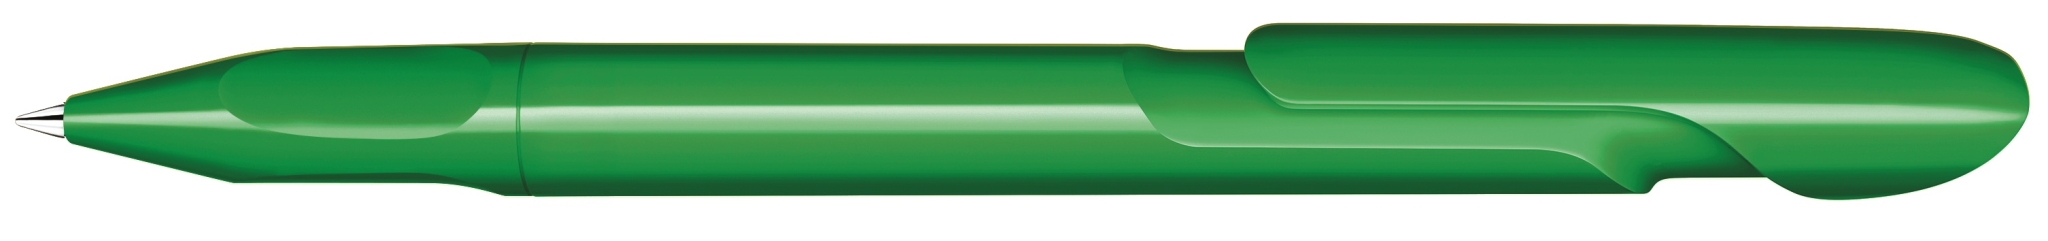  3273 Evoxx Polished Recycled зеленый 347, зеленый, пластик